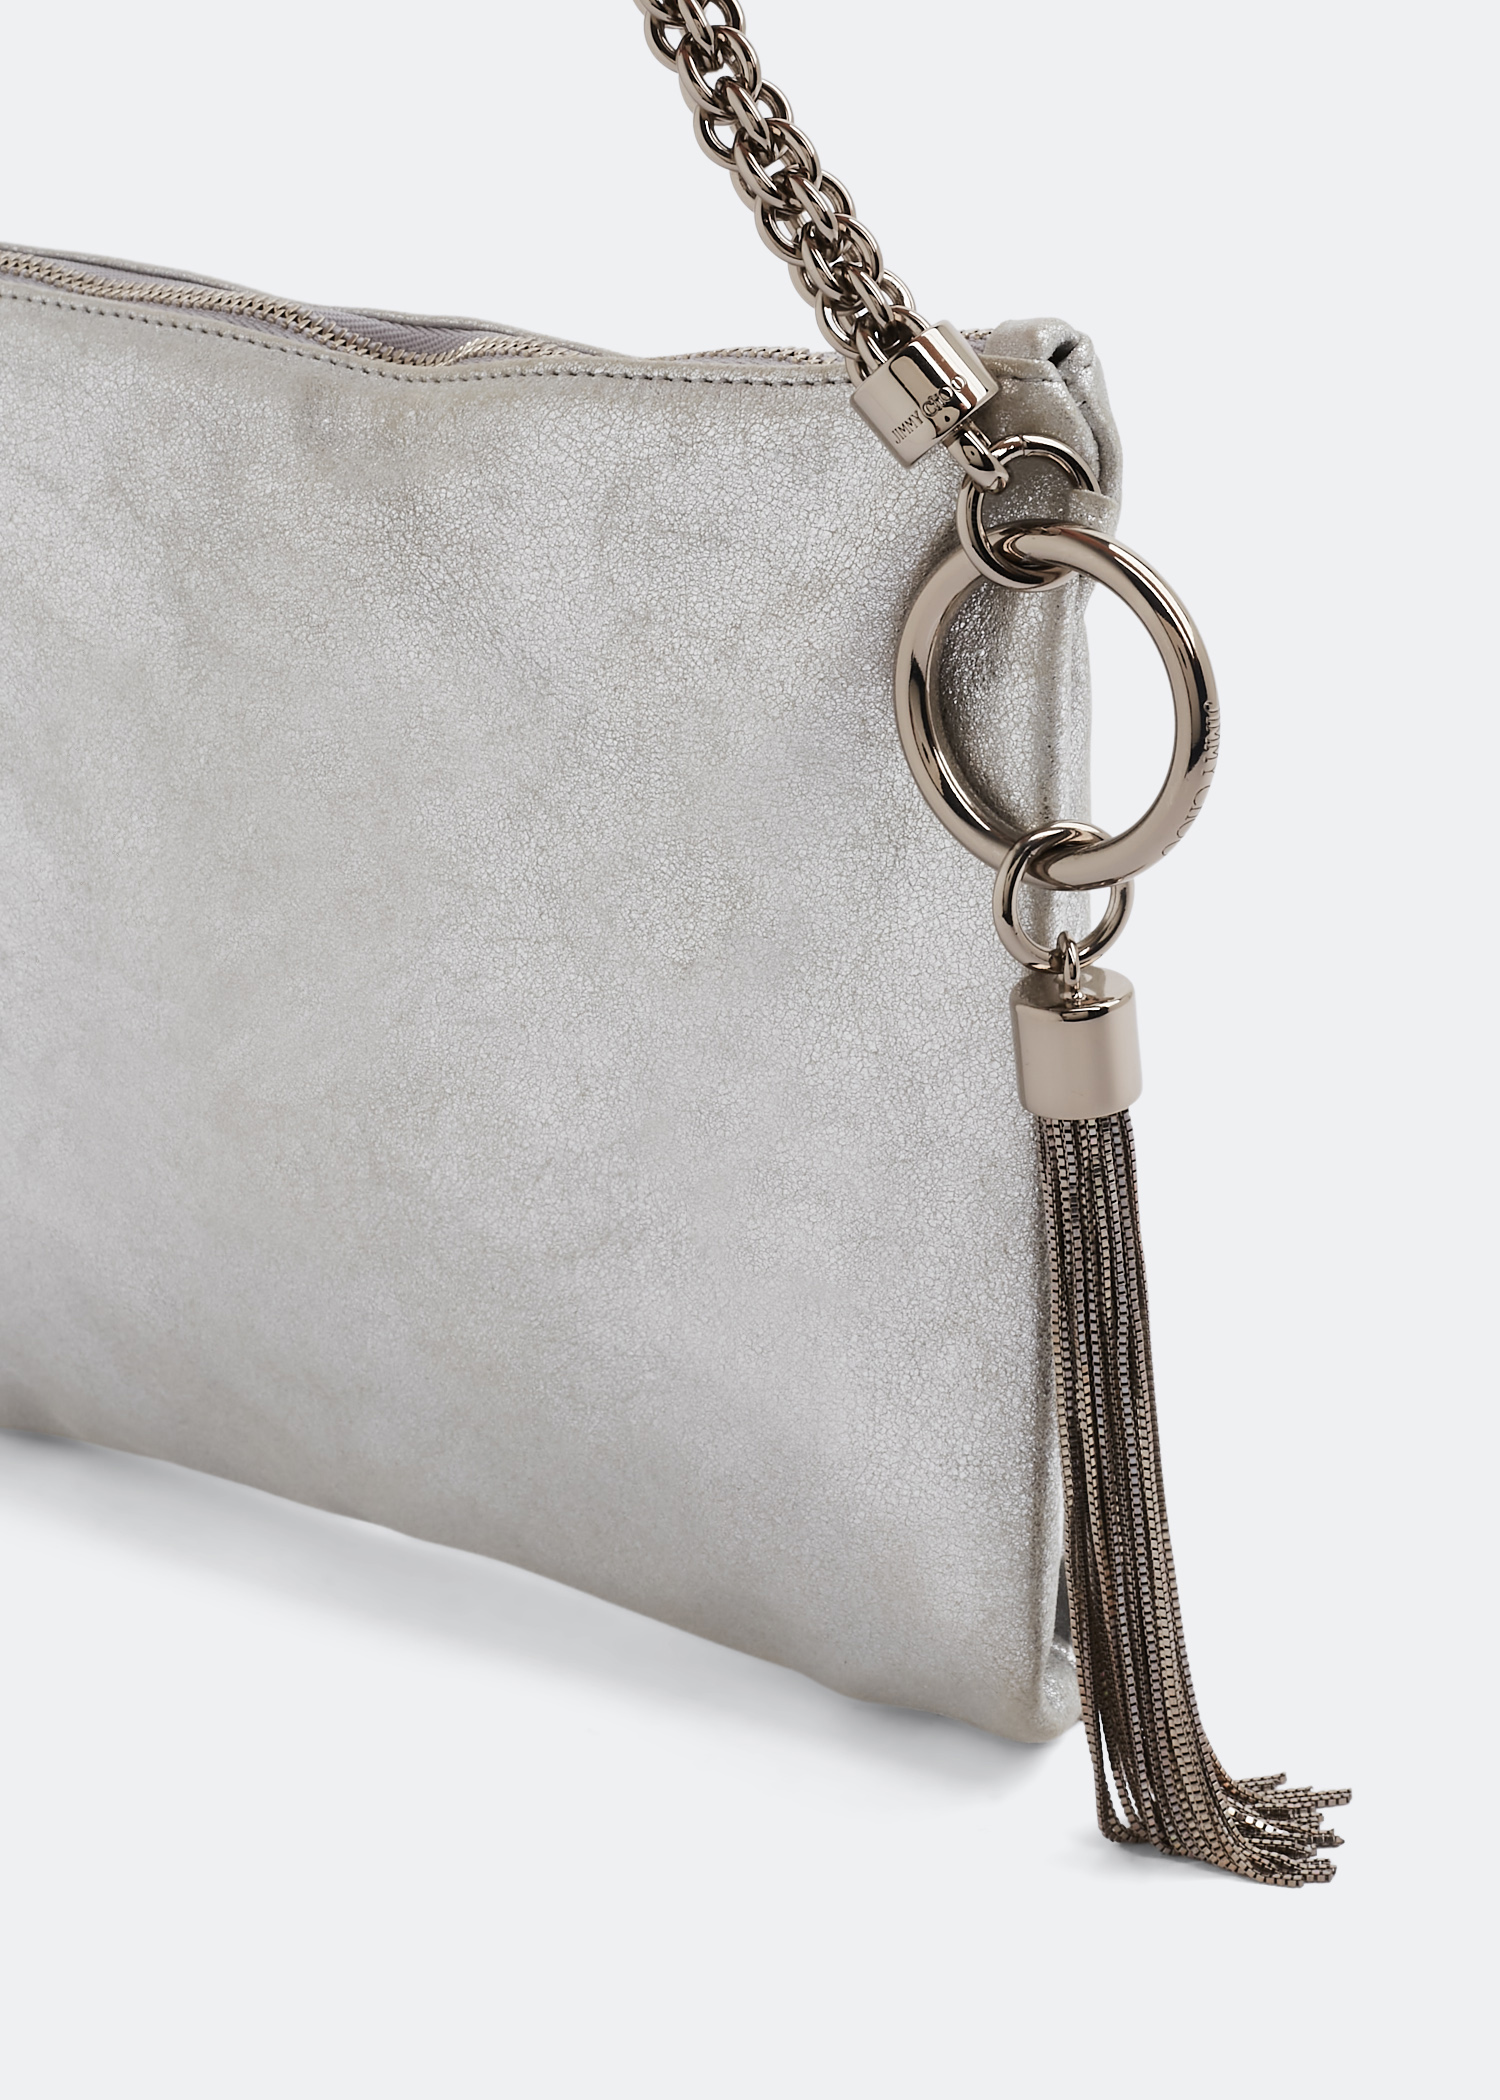 Jimmy Choo Callie bag for Women - Silver in KSA | Level Shoes